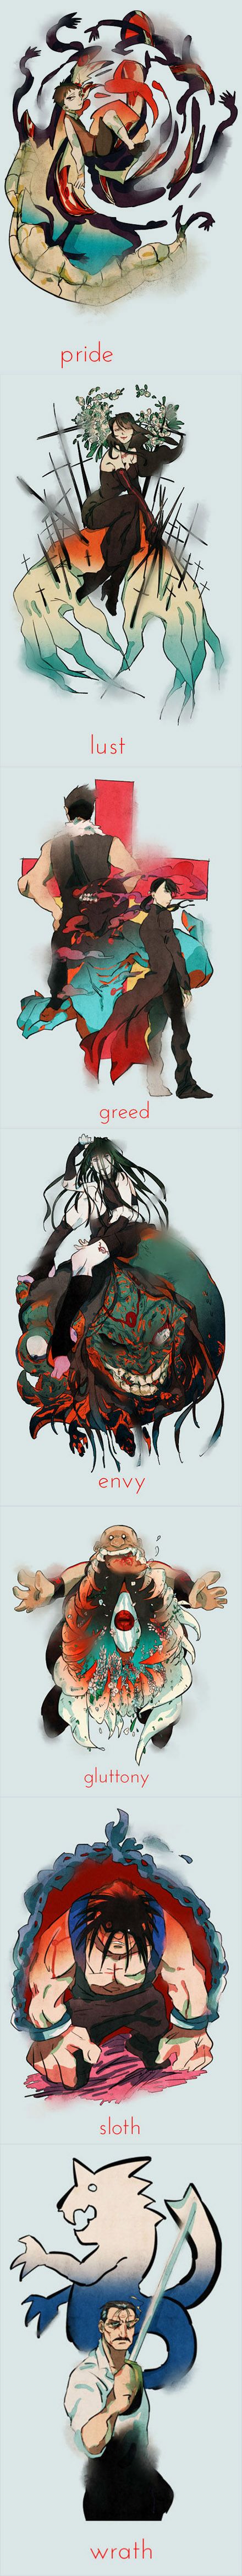 Fullmetal Alchemist - the Seven Deadly Sins - homunculi